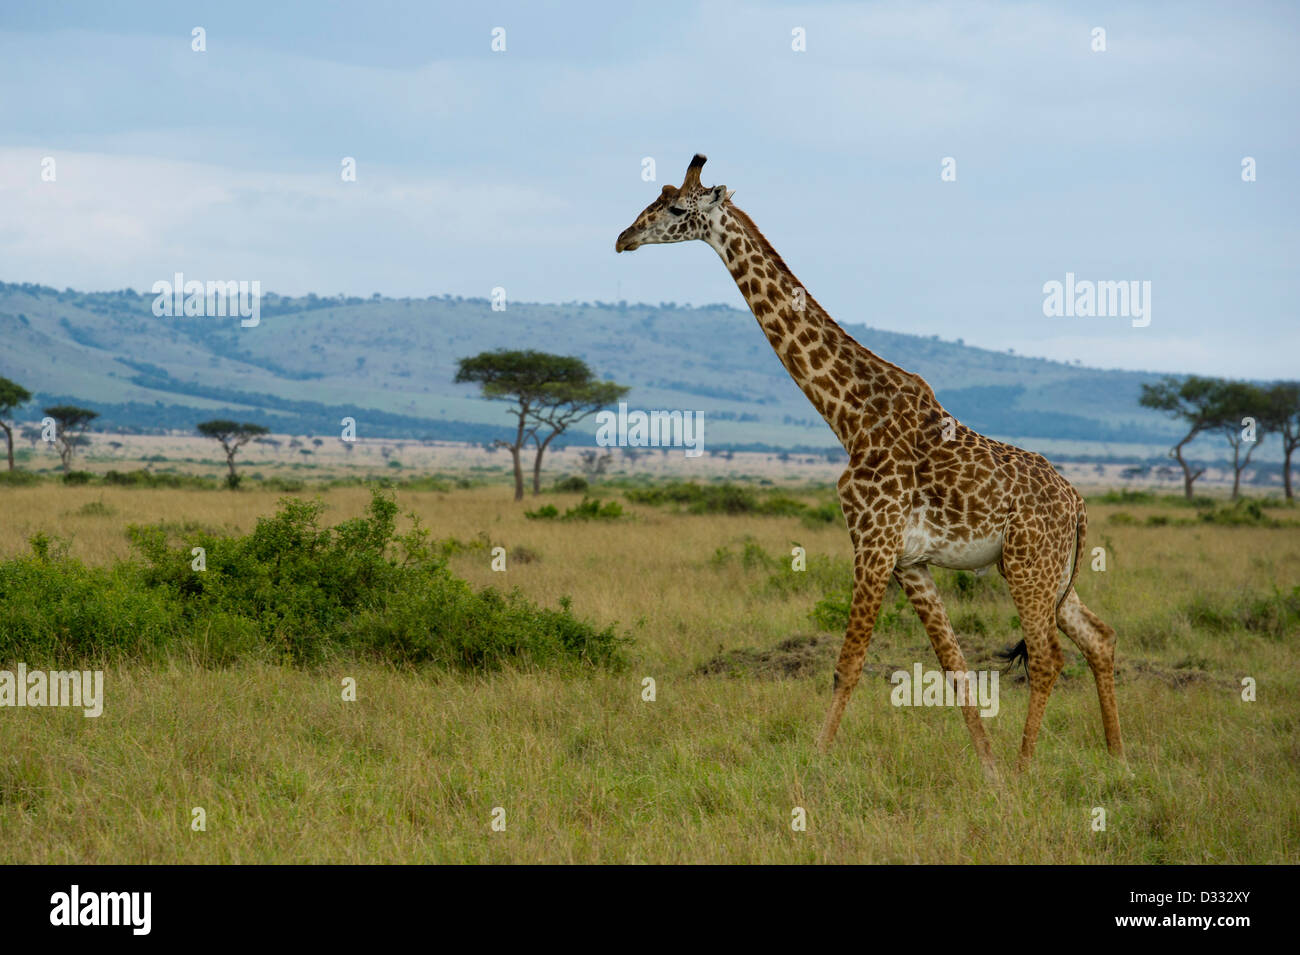 Maasai giraffe (Giraffa camelopardalis tippelskirchi) in front of the Oloololo escarpment, Maasai Mara National Reserve, Kenya Stock Photo